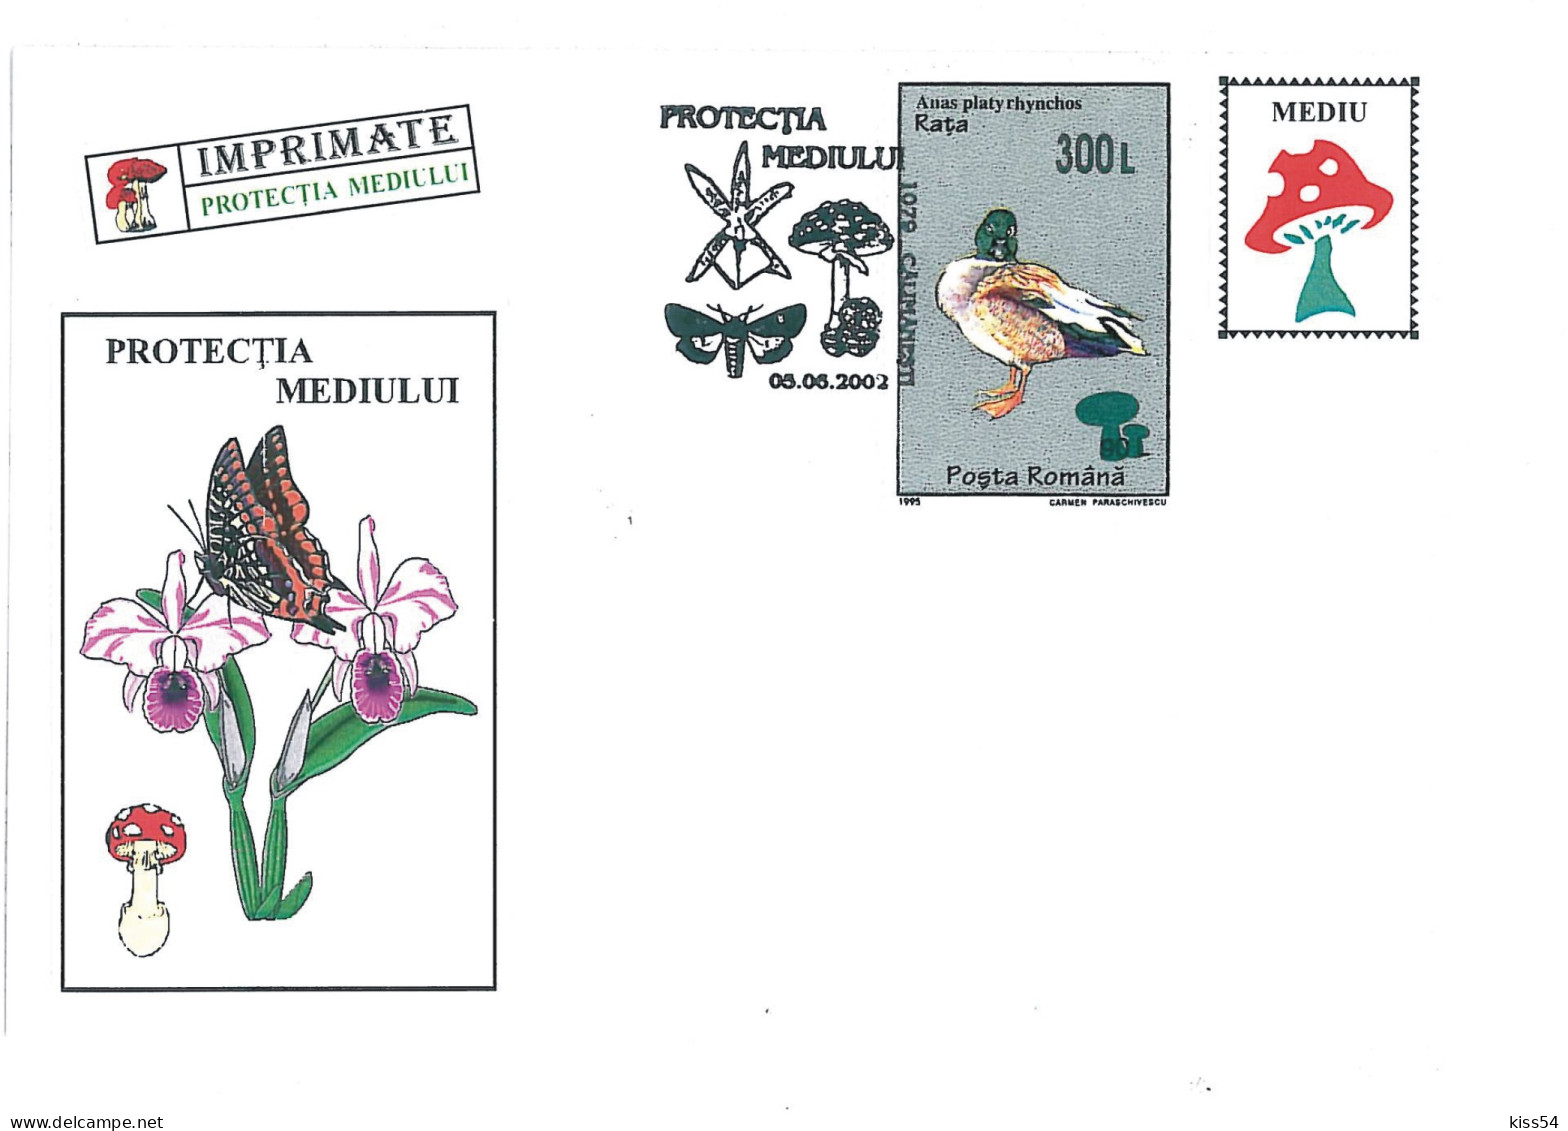 COV 22 - 1743 MUSHROOM, Environmental Protection, Romania - Cover - Used - 2002 - Maximum Cards & Covers